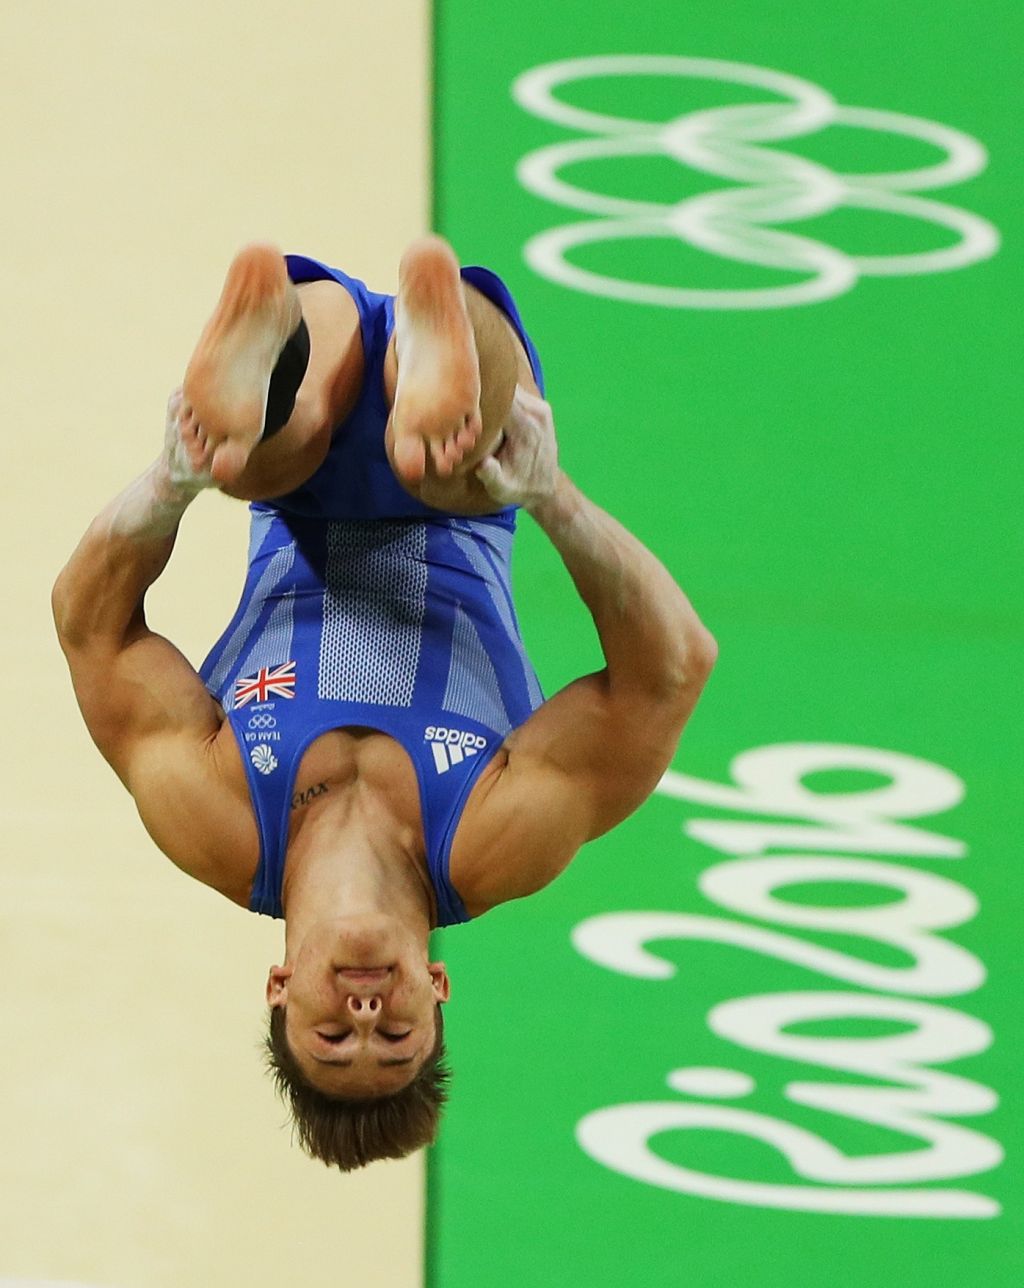 Gymnastics - Artistic - Olympics: Day 1